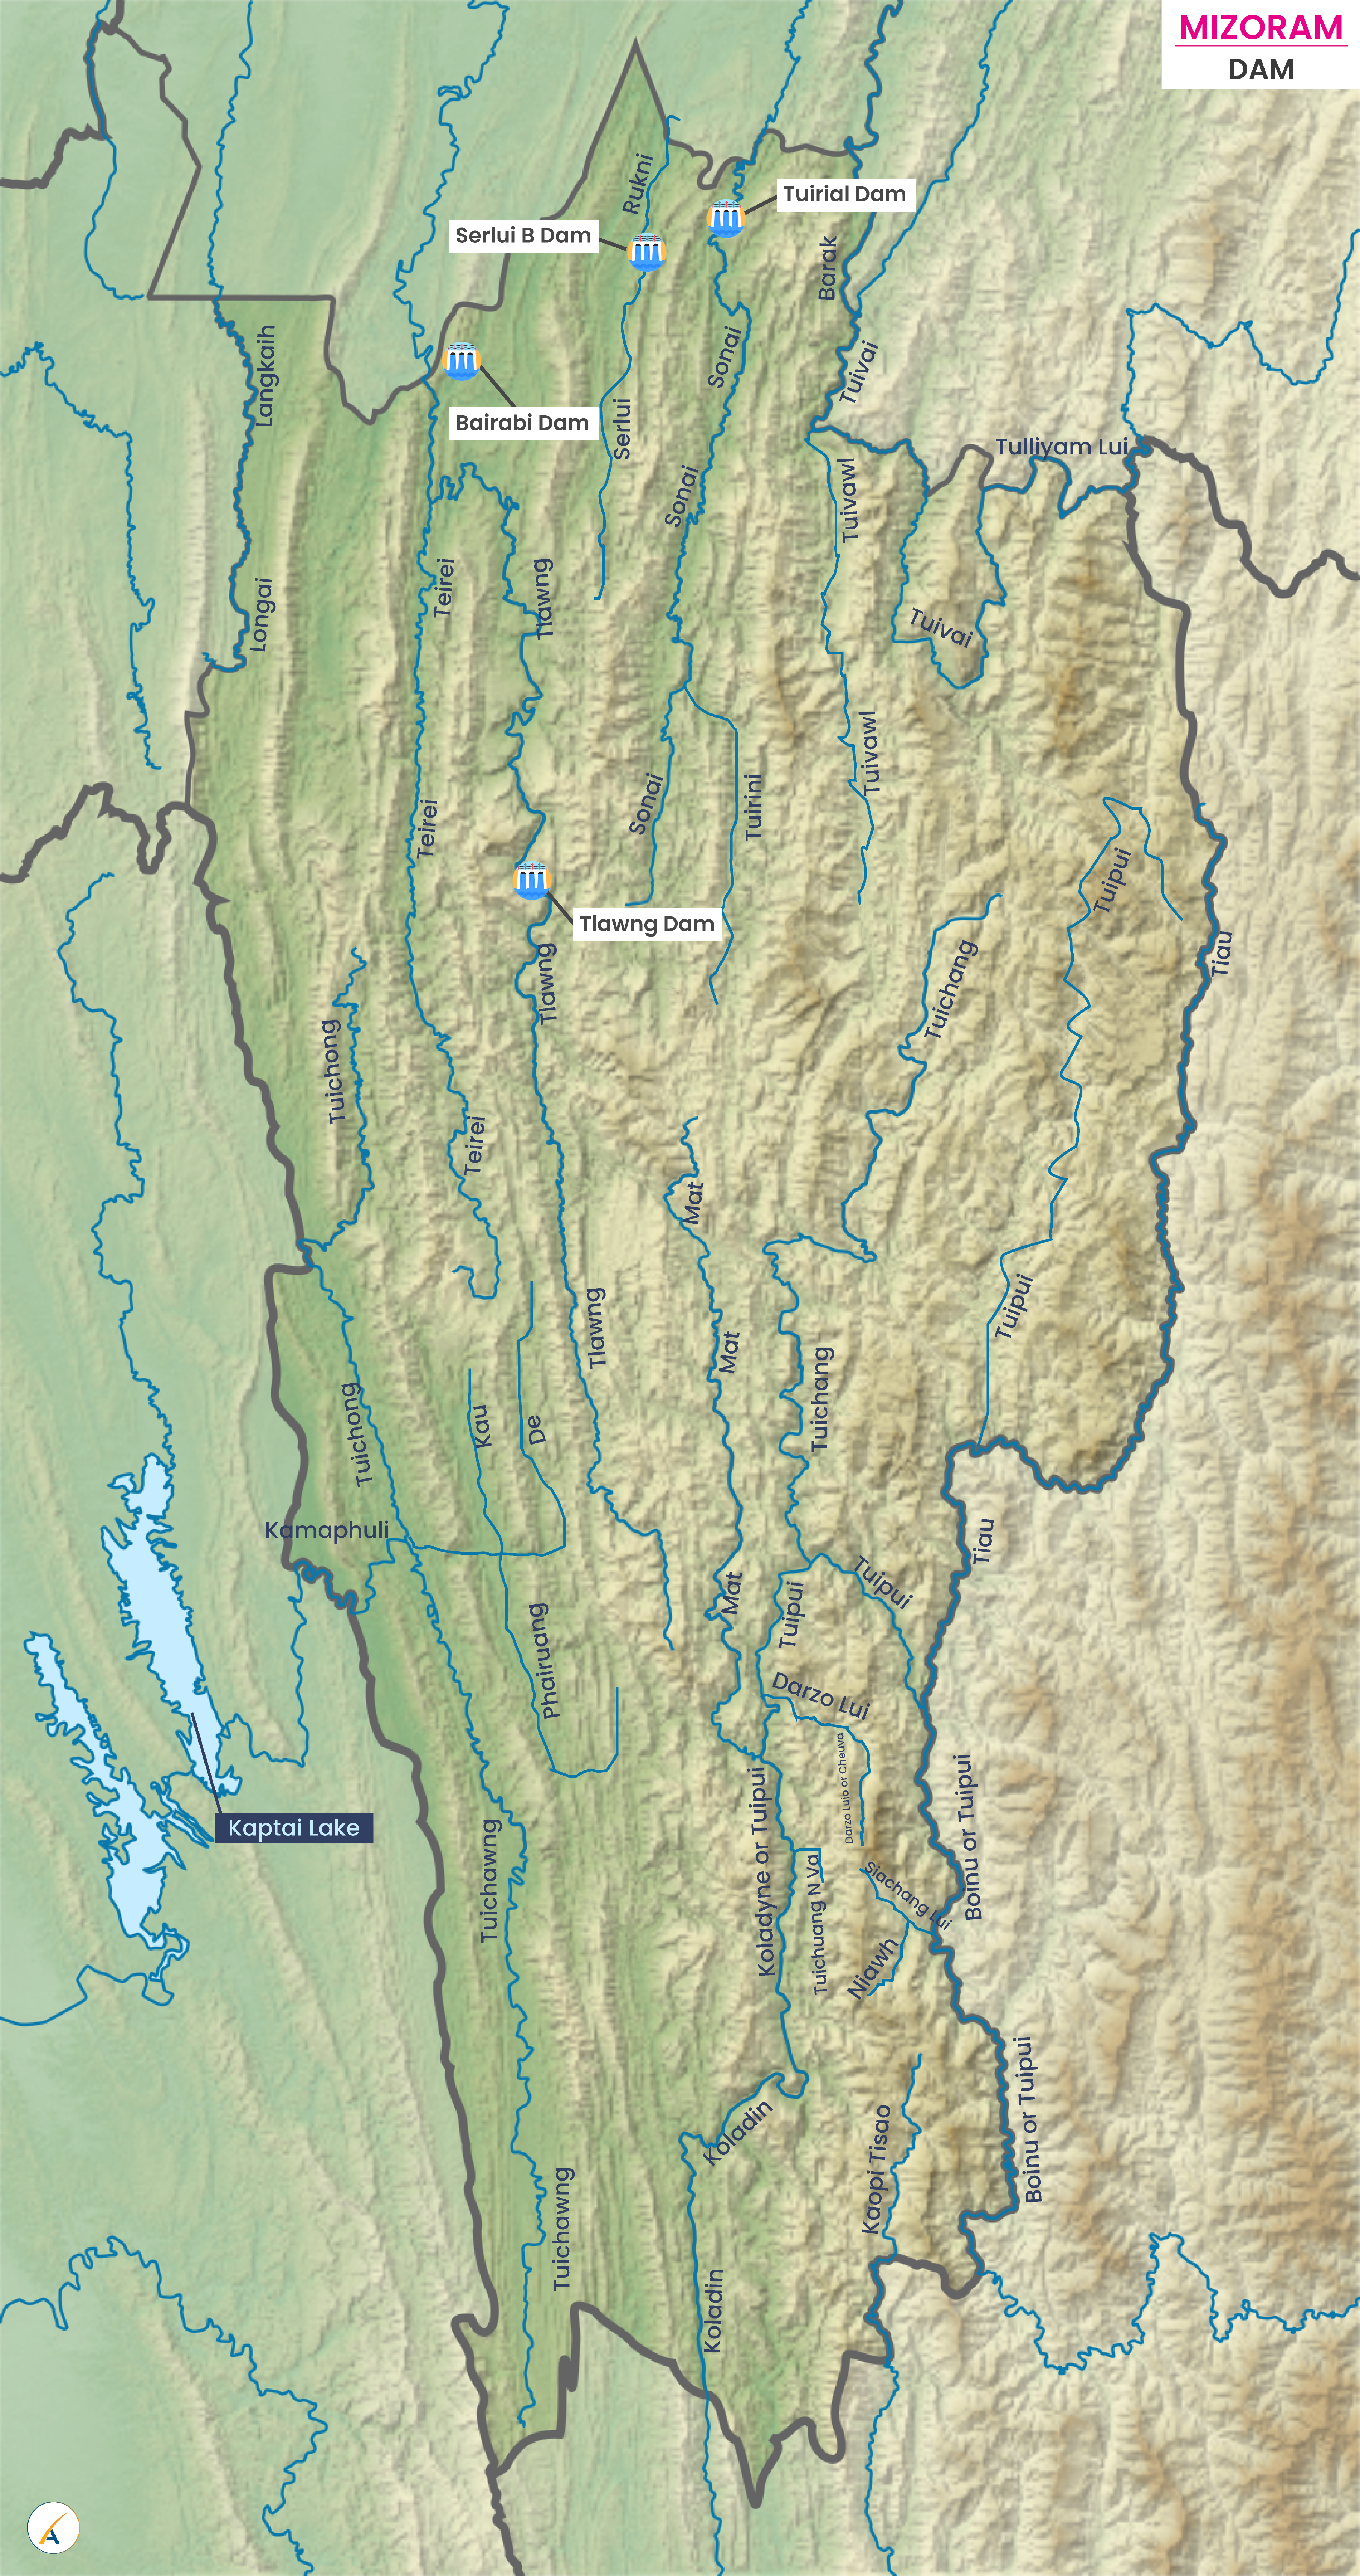 Major Dams in Mizoram